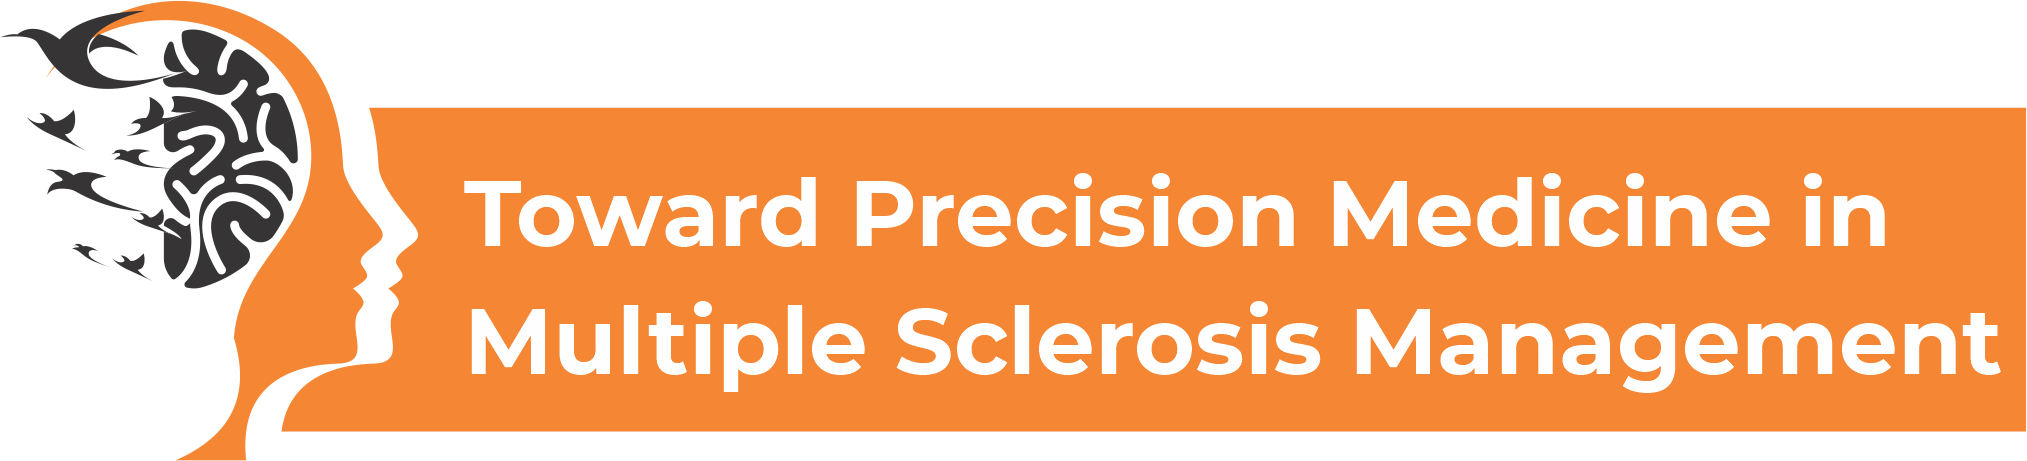 Toward Precision Medicine in Multiple Sclerosis Management